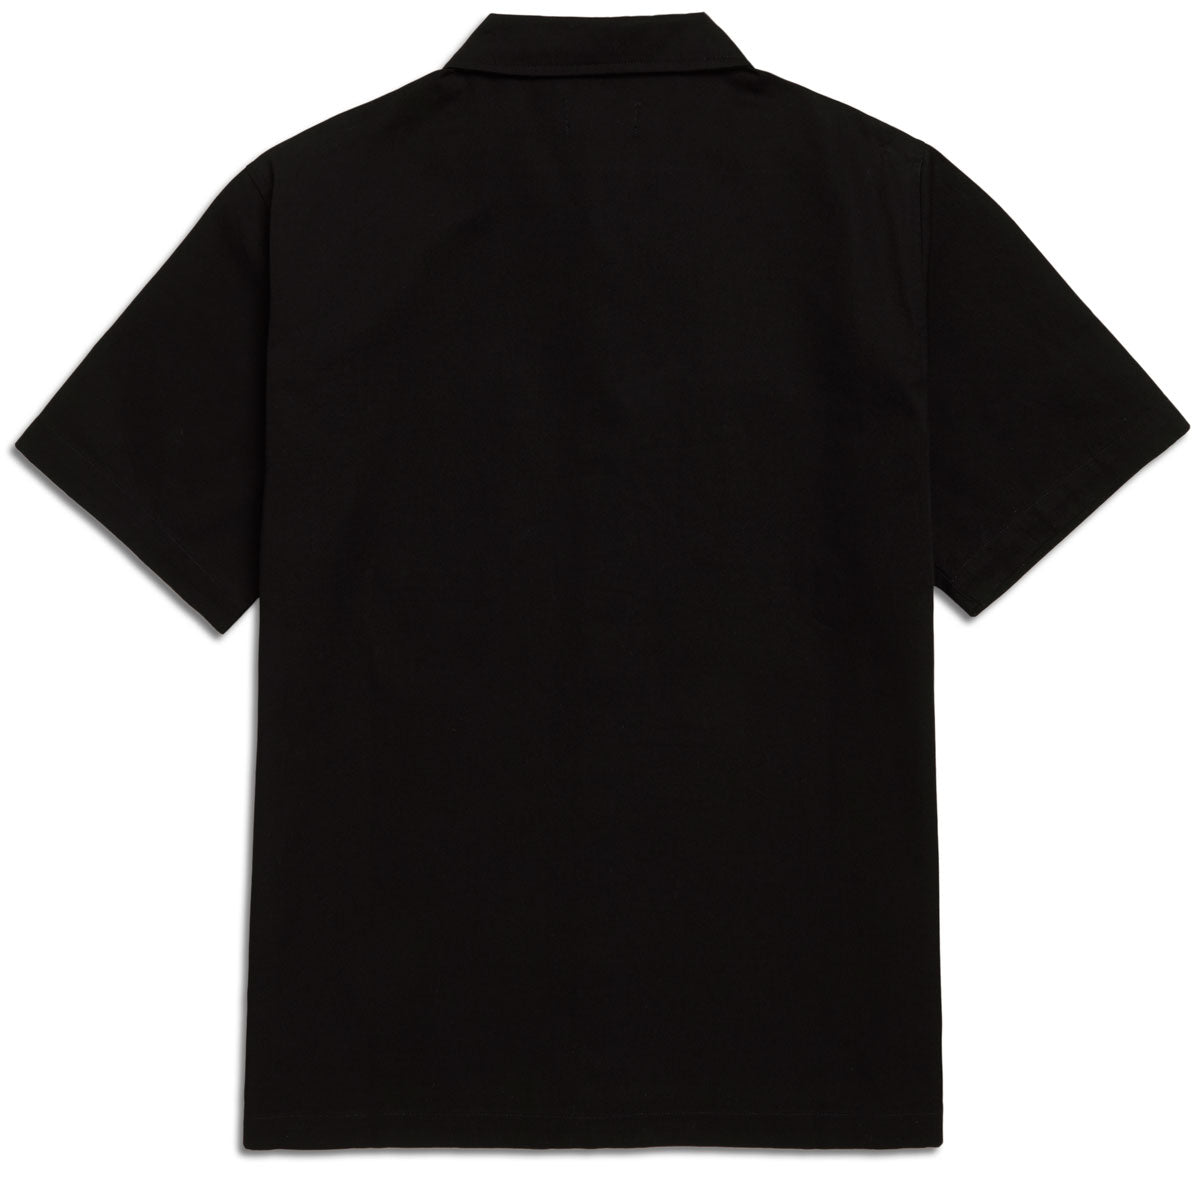 CCS Custom Embroidered Work Shirt - Black image 3